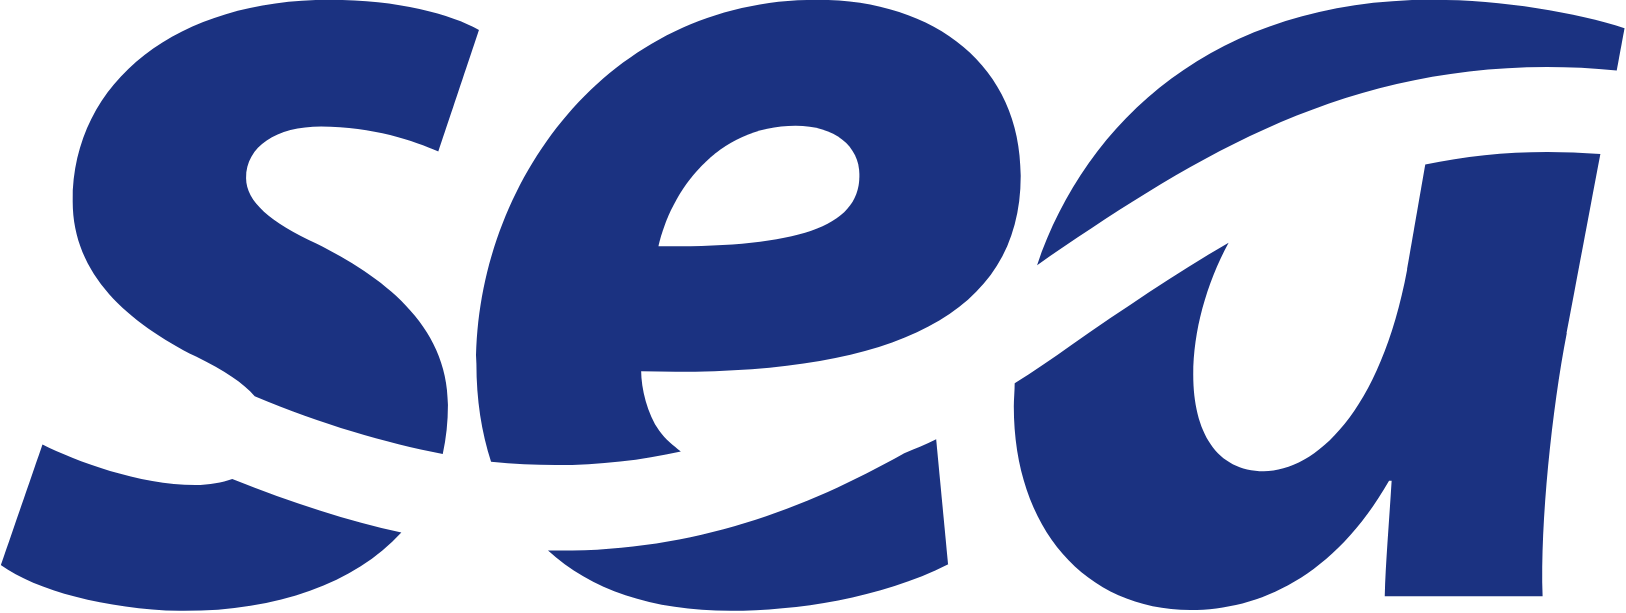 Seanergy Maritime logo (transparent PNG)